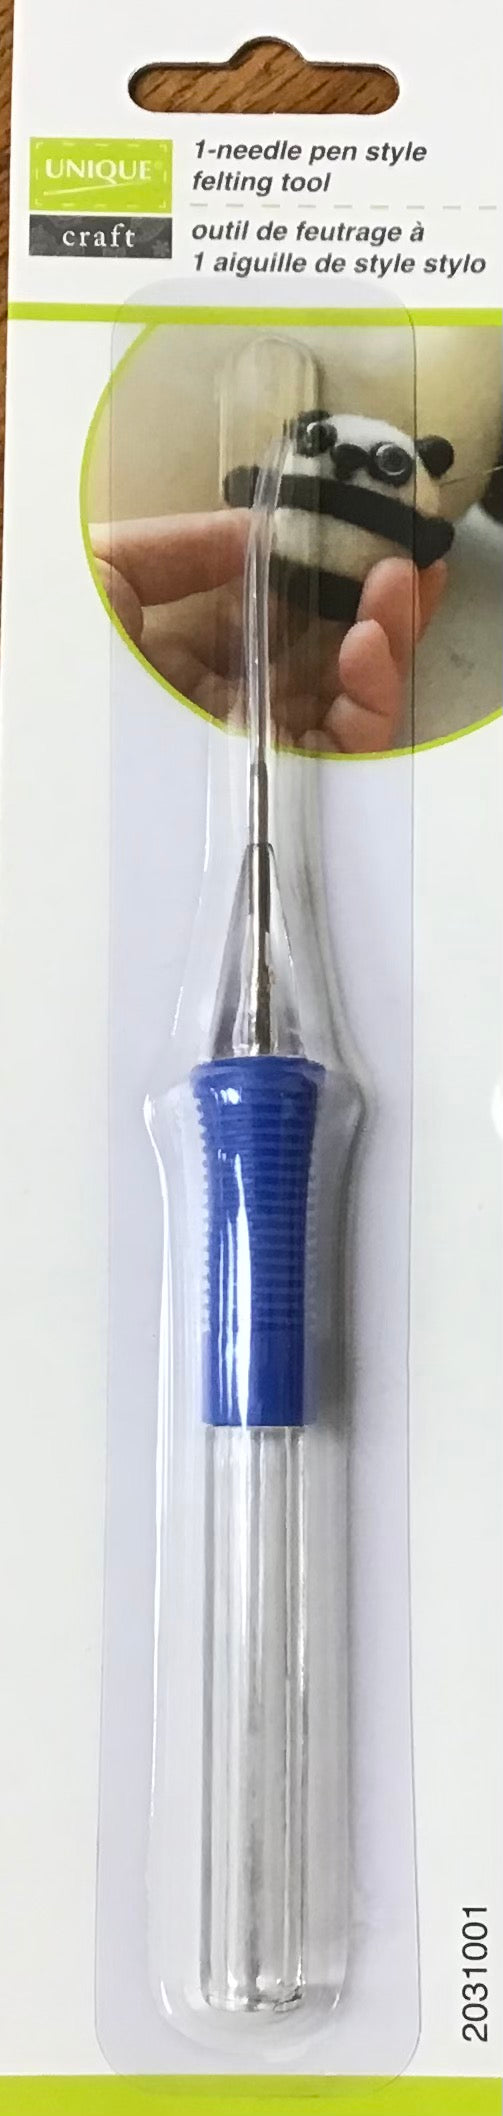 1-Needle pen style felting tool